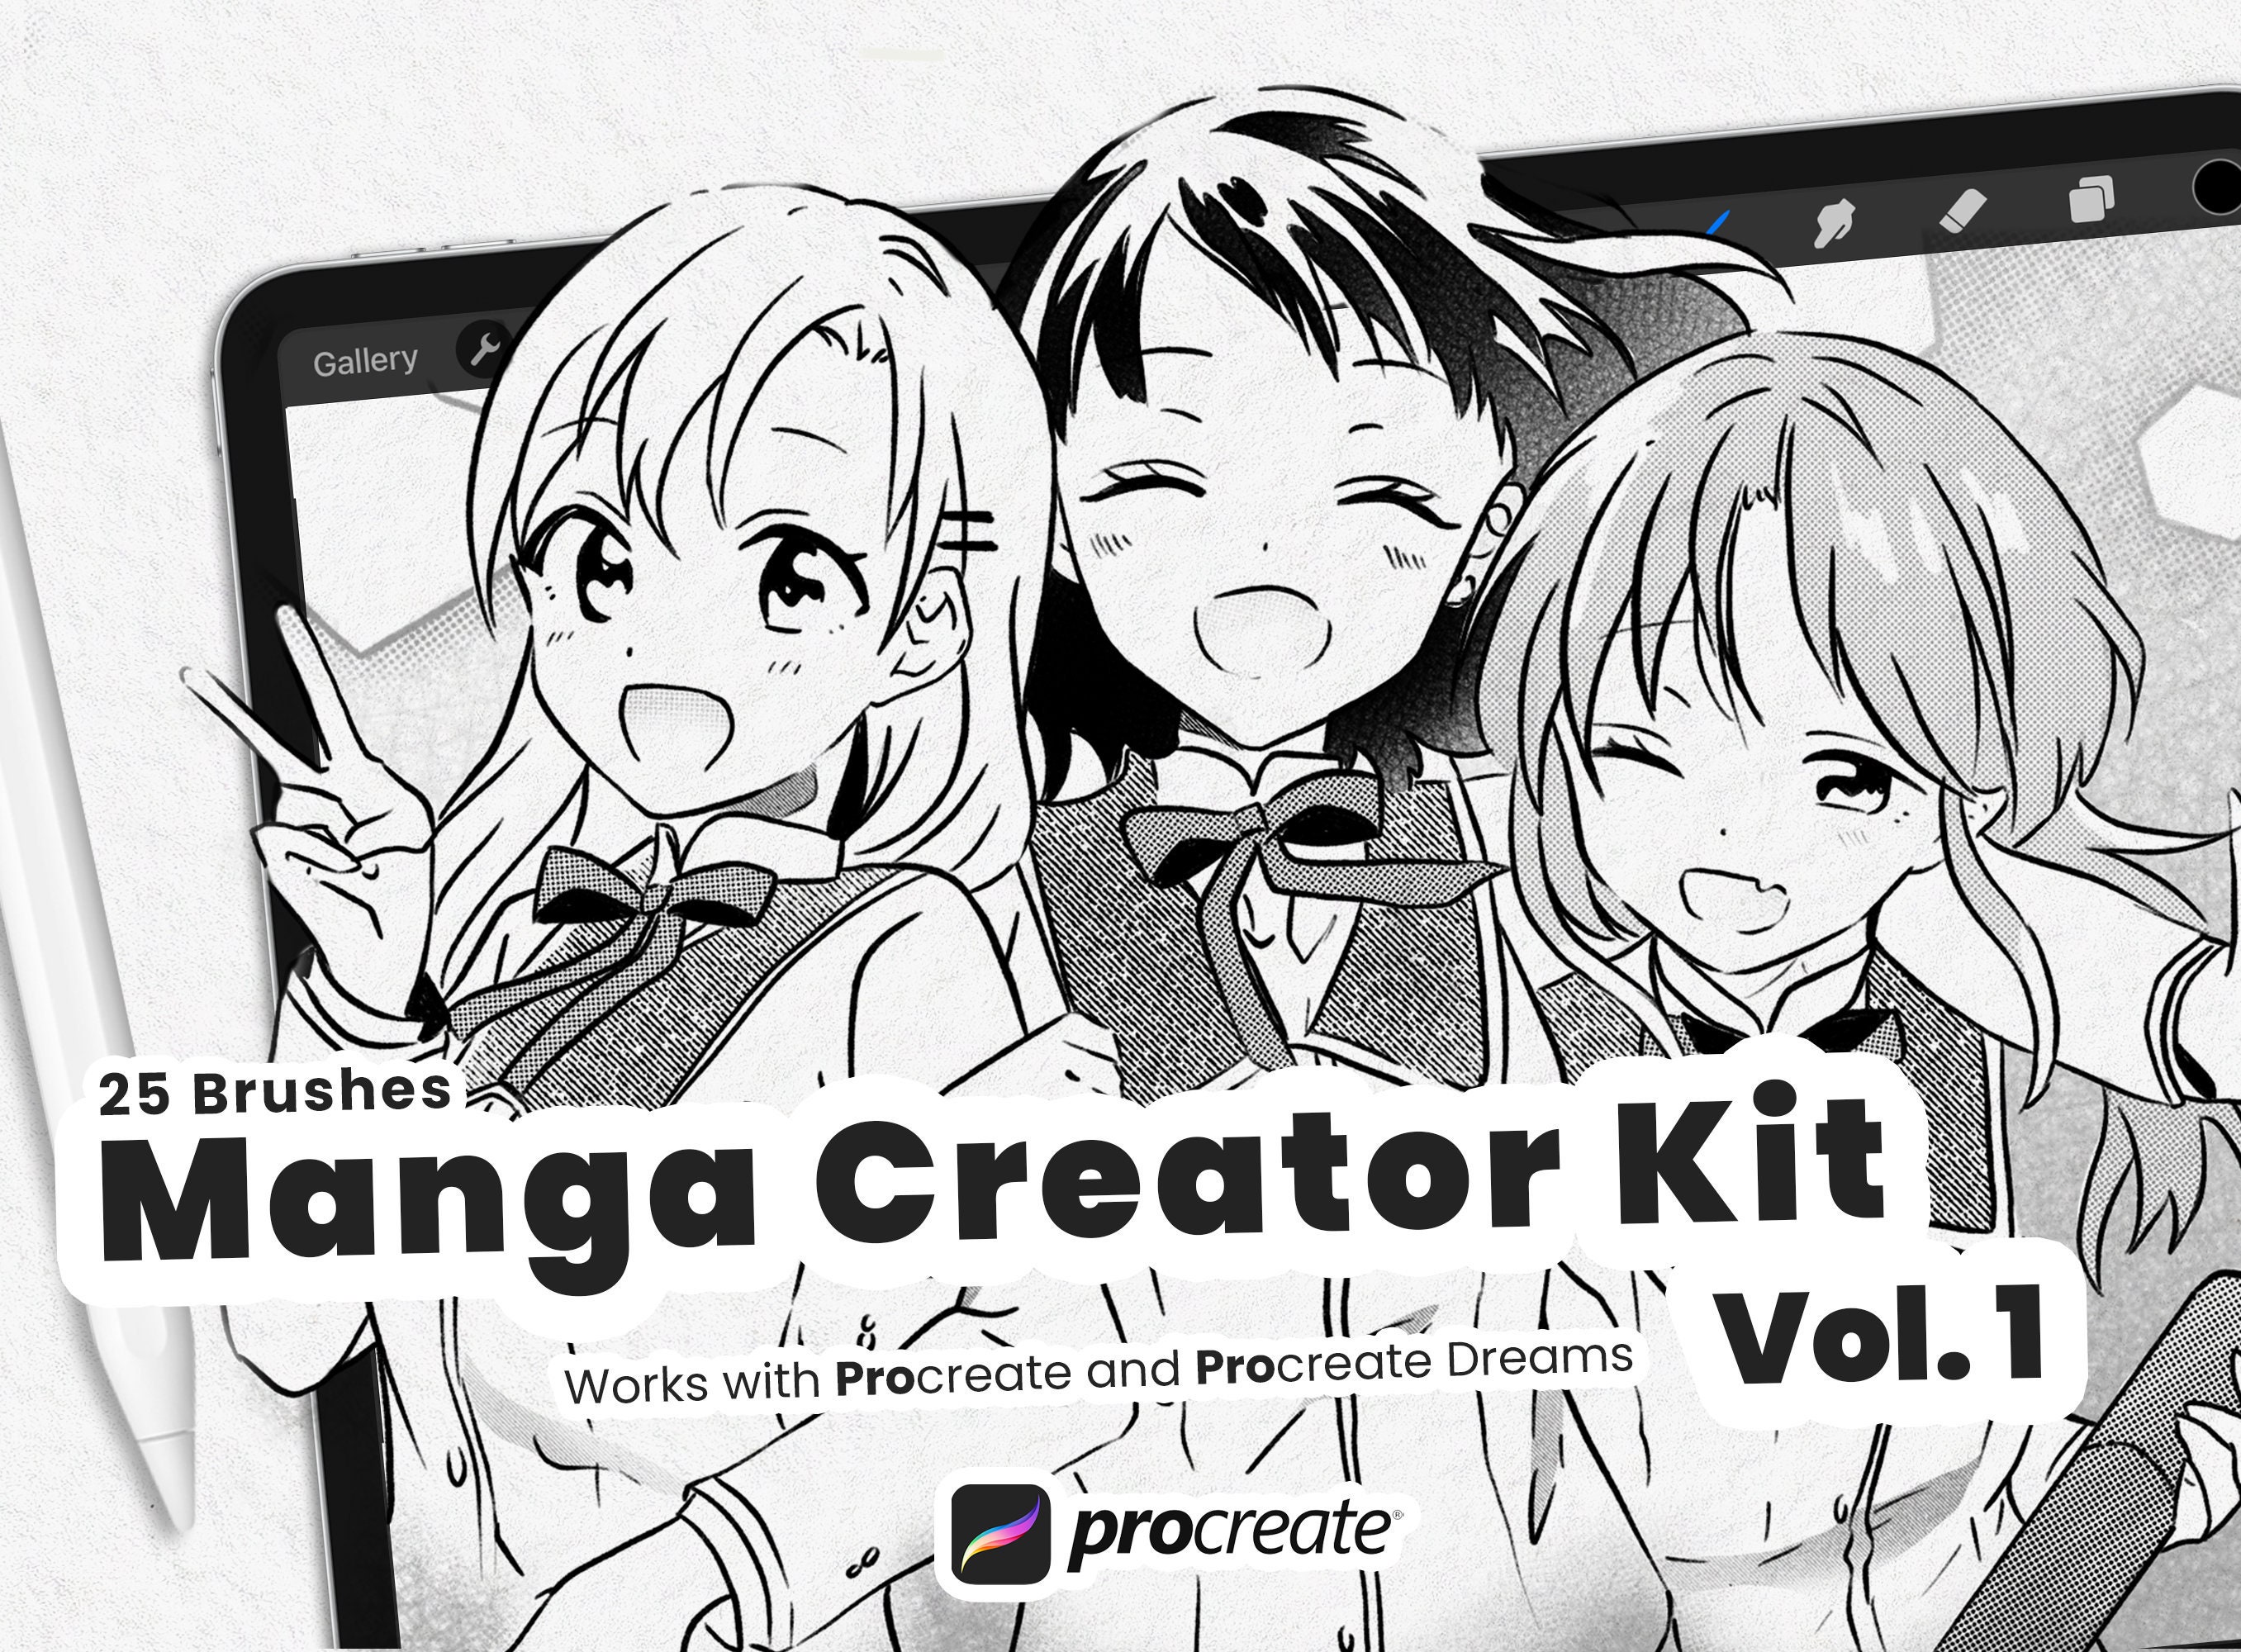 Art Maker How to Draw Manga Kit – CuriousUniverse